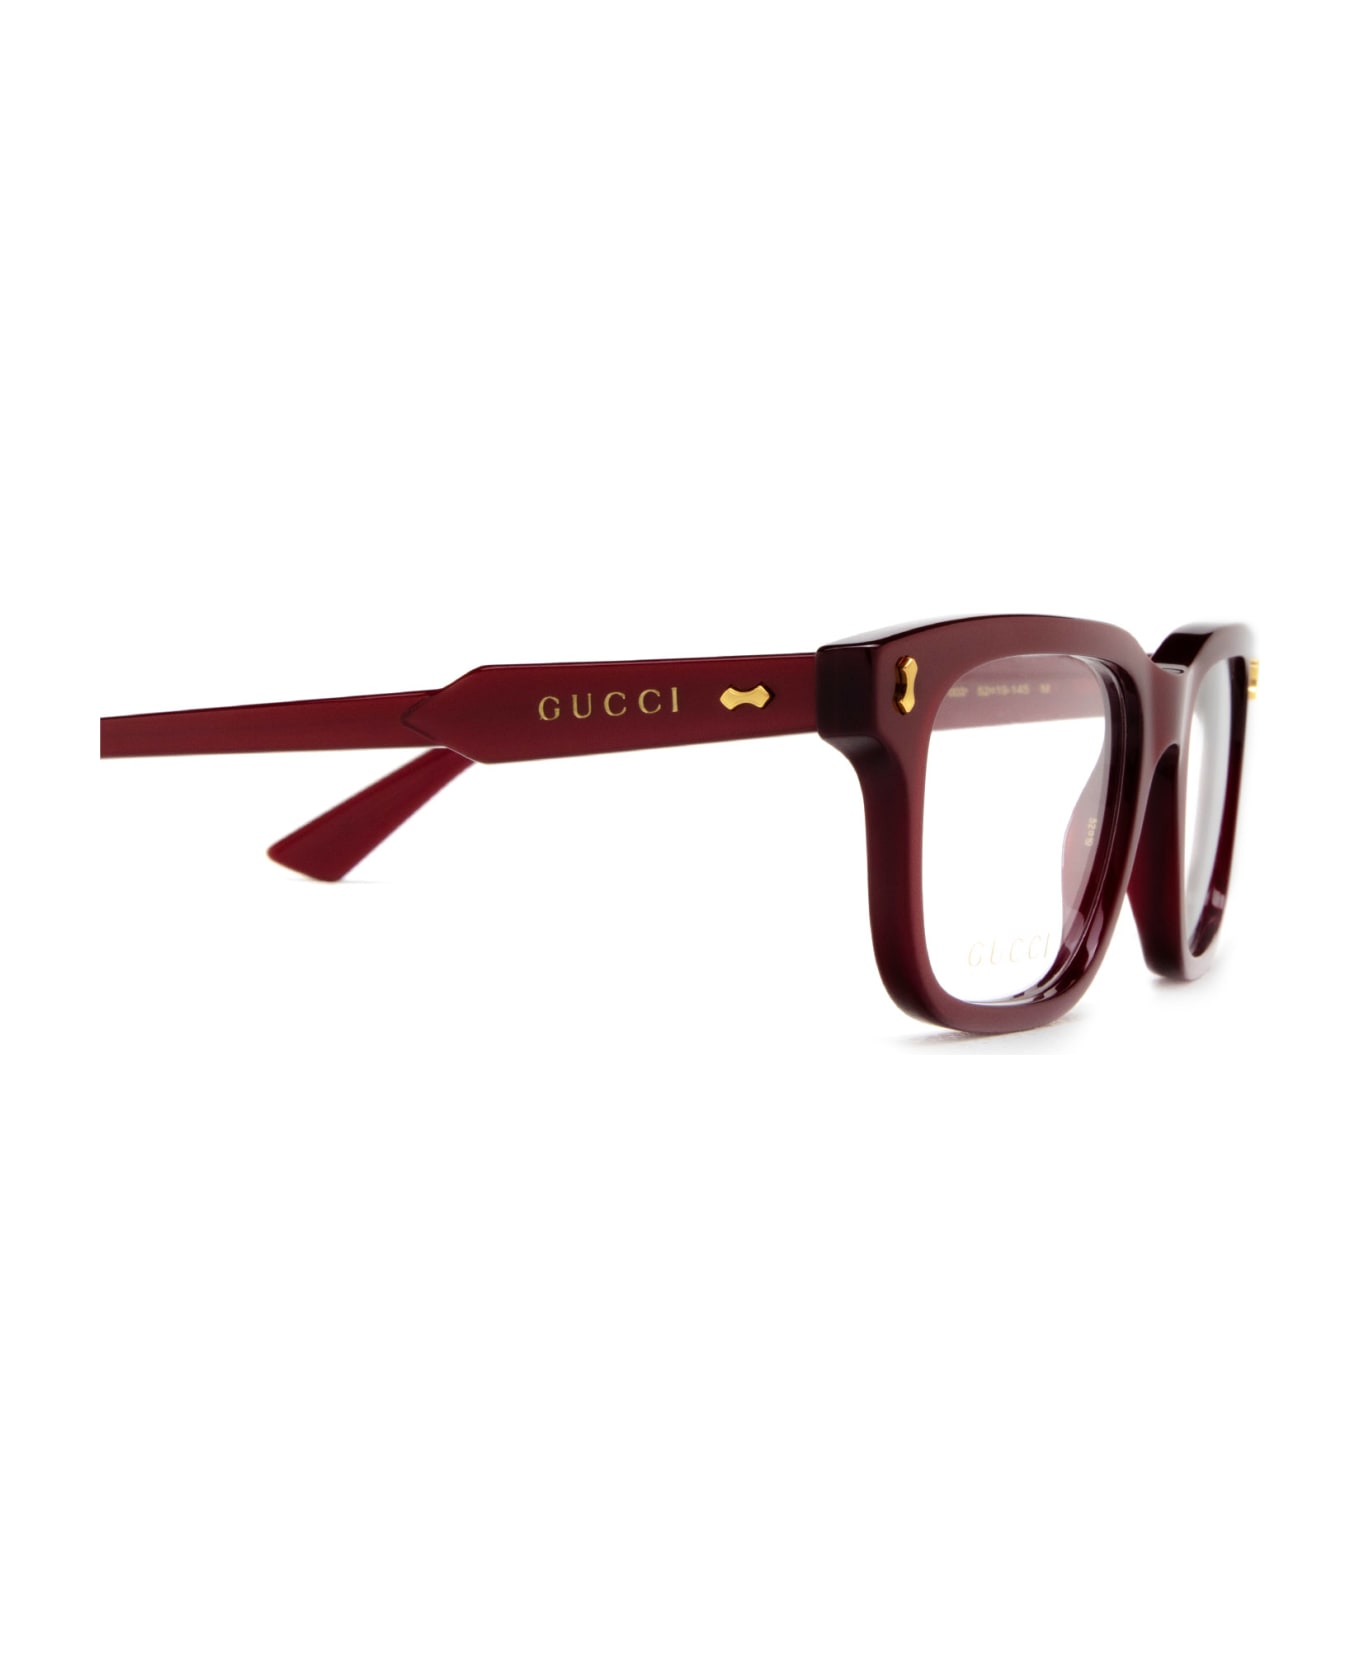 Gucci Eyewear Gg1265o Burgundy Glasses - Burgundy アイウェア